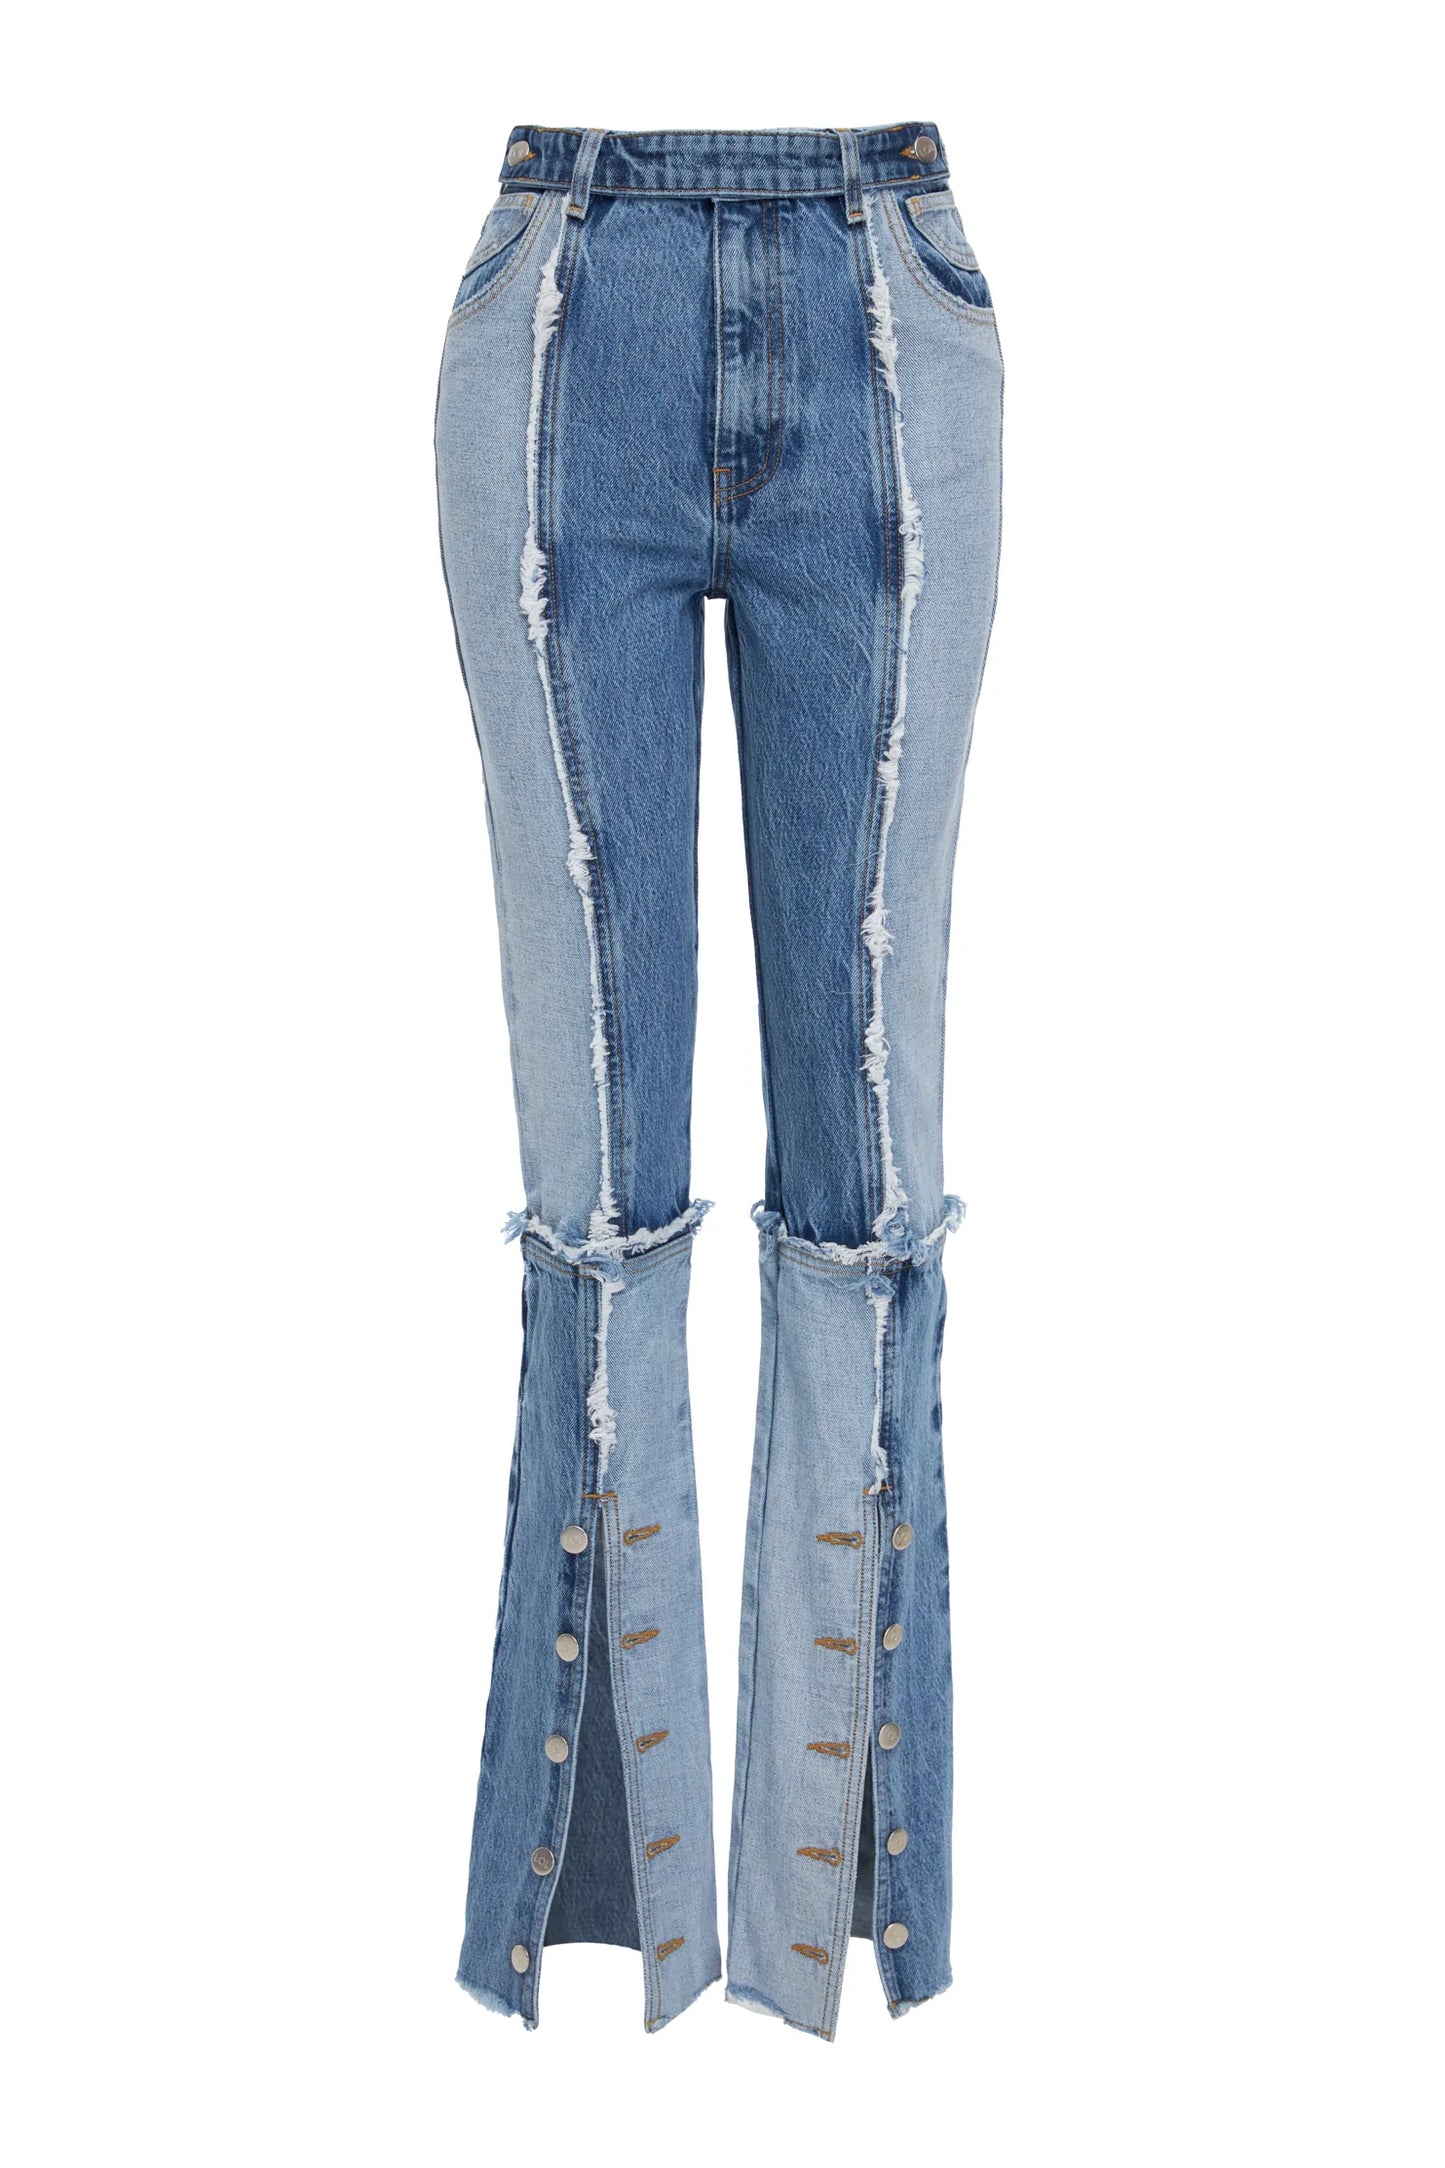 Bella - Blue Jeans